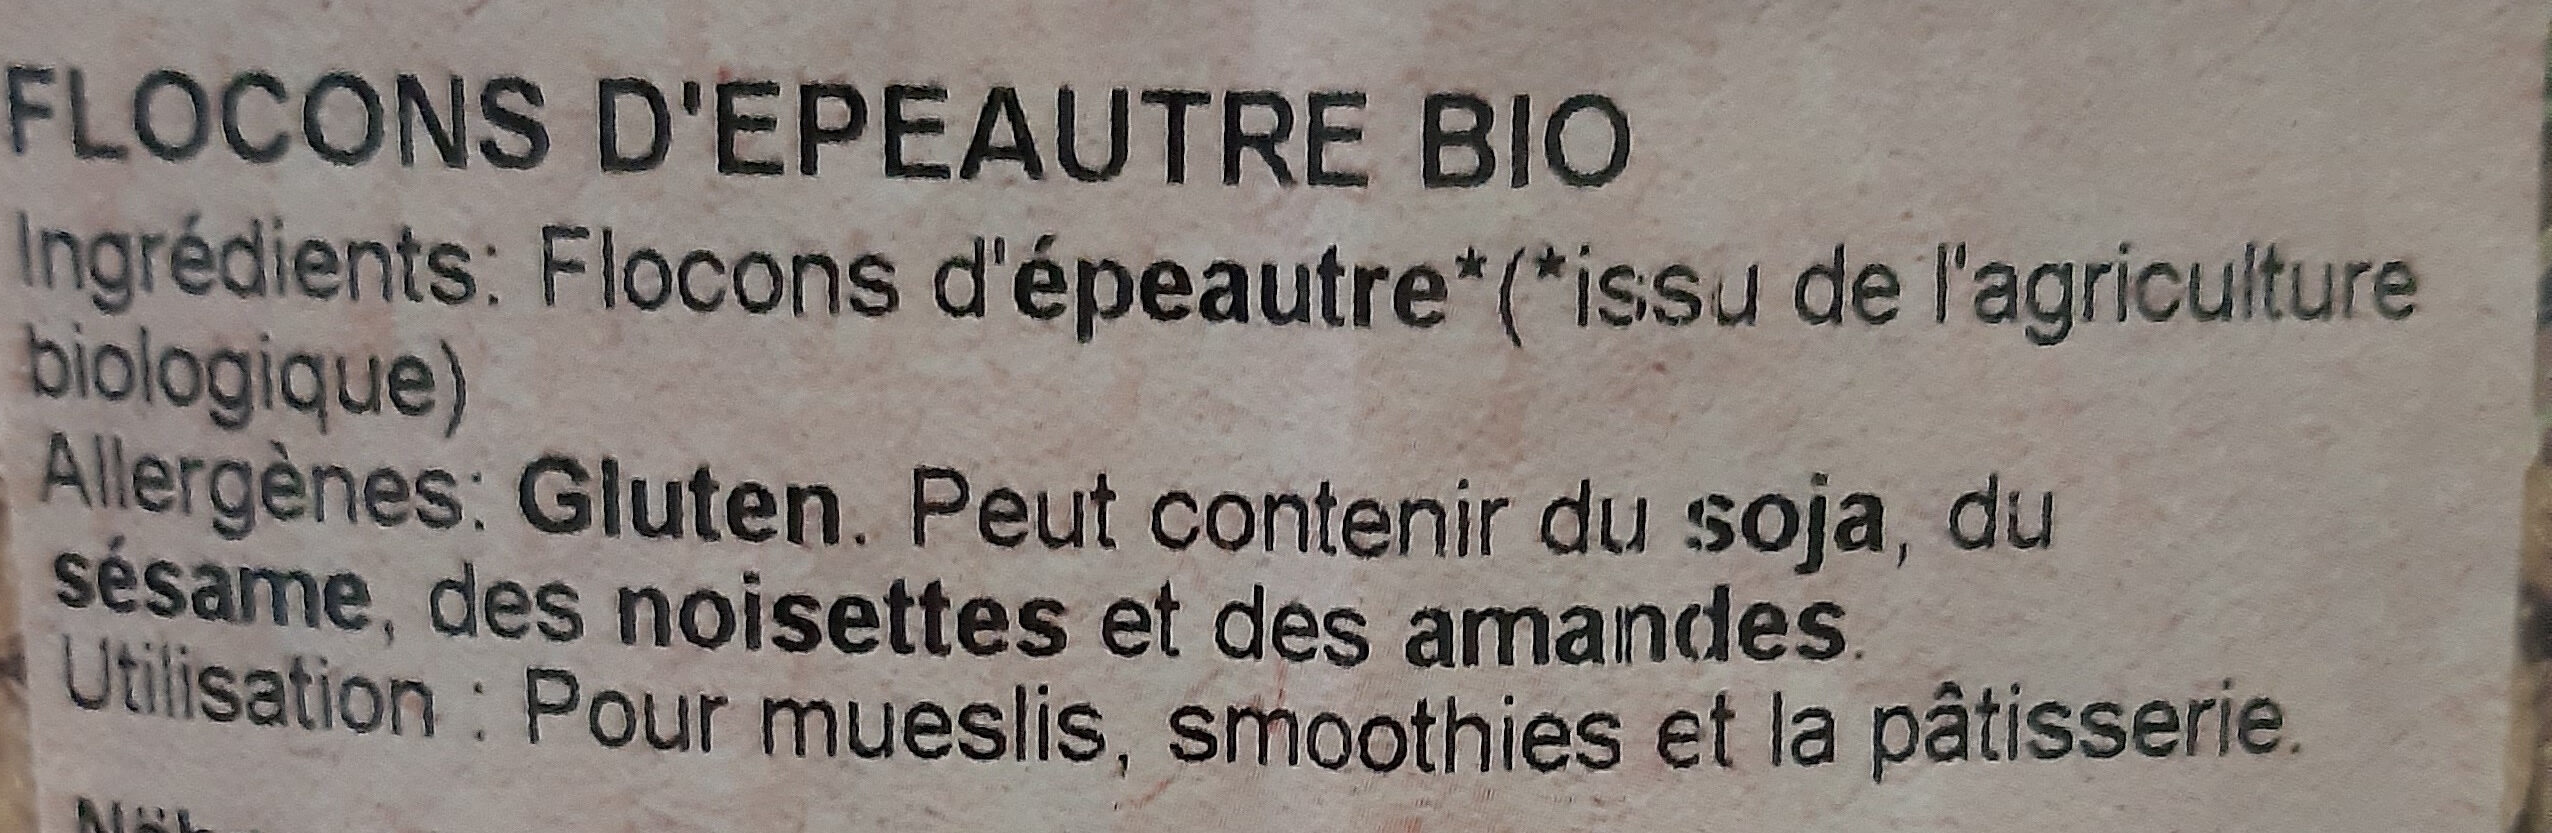 Flocons d'Epeautre Bio - Ingredienti - fr